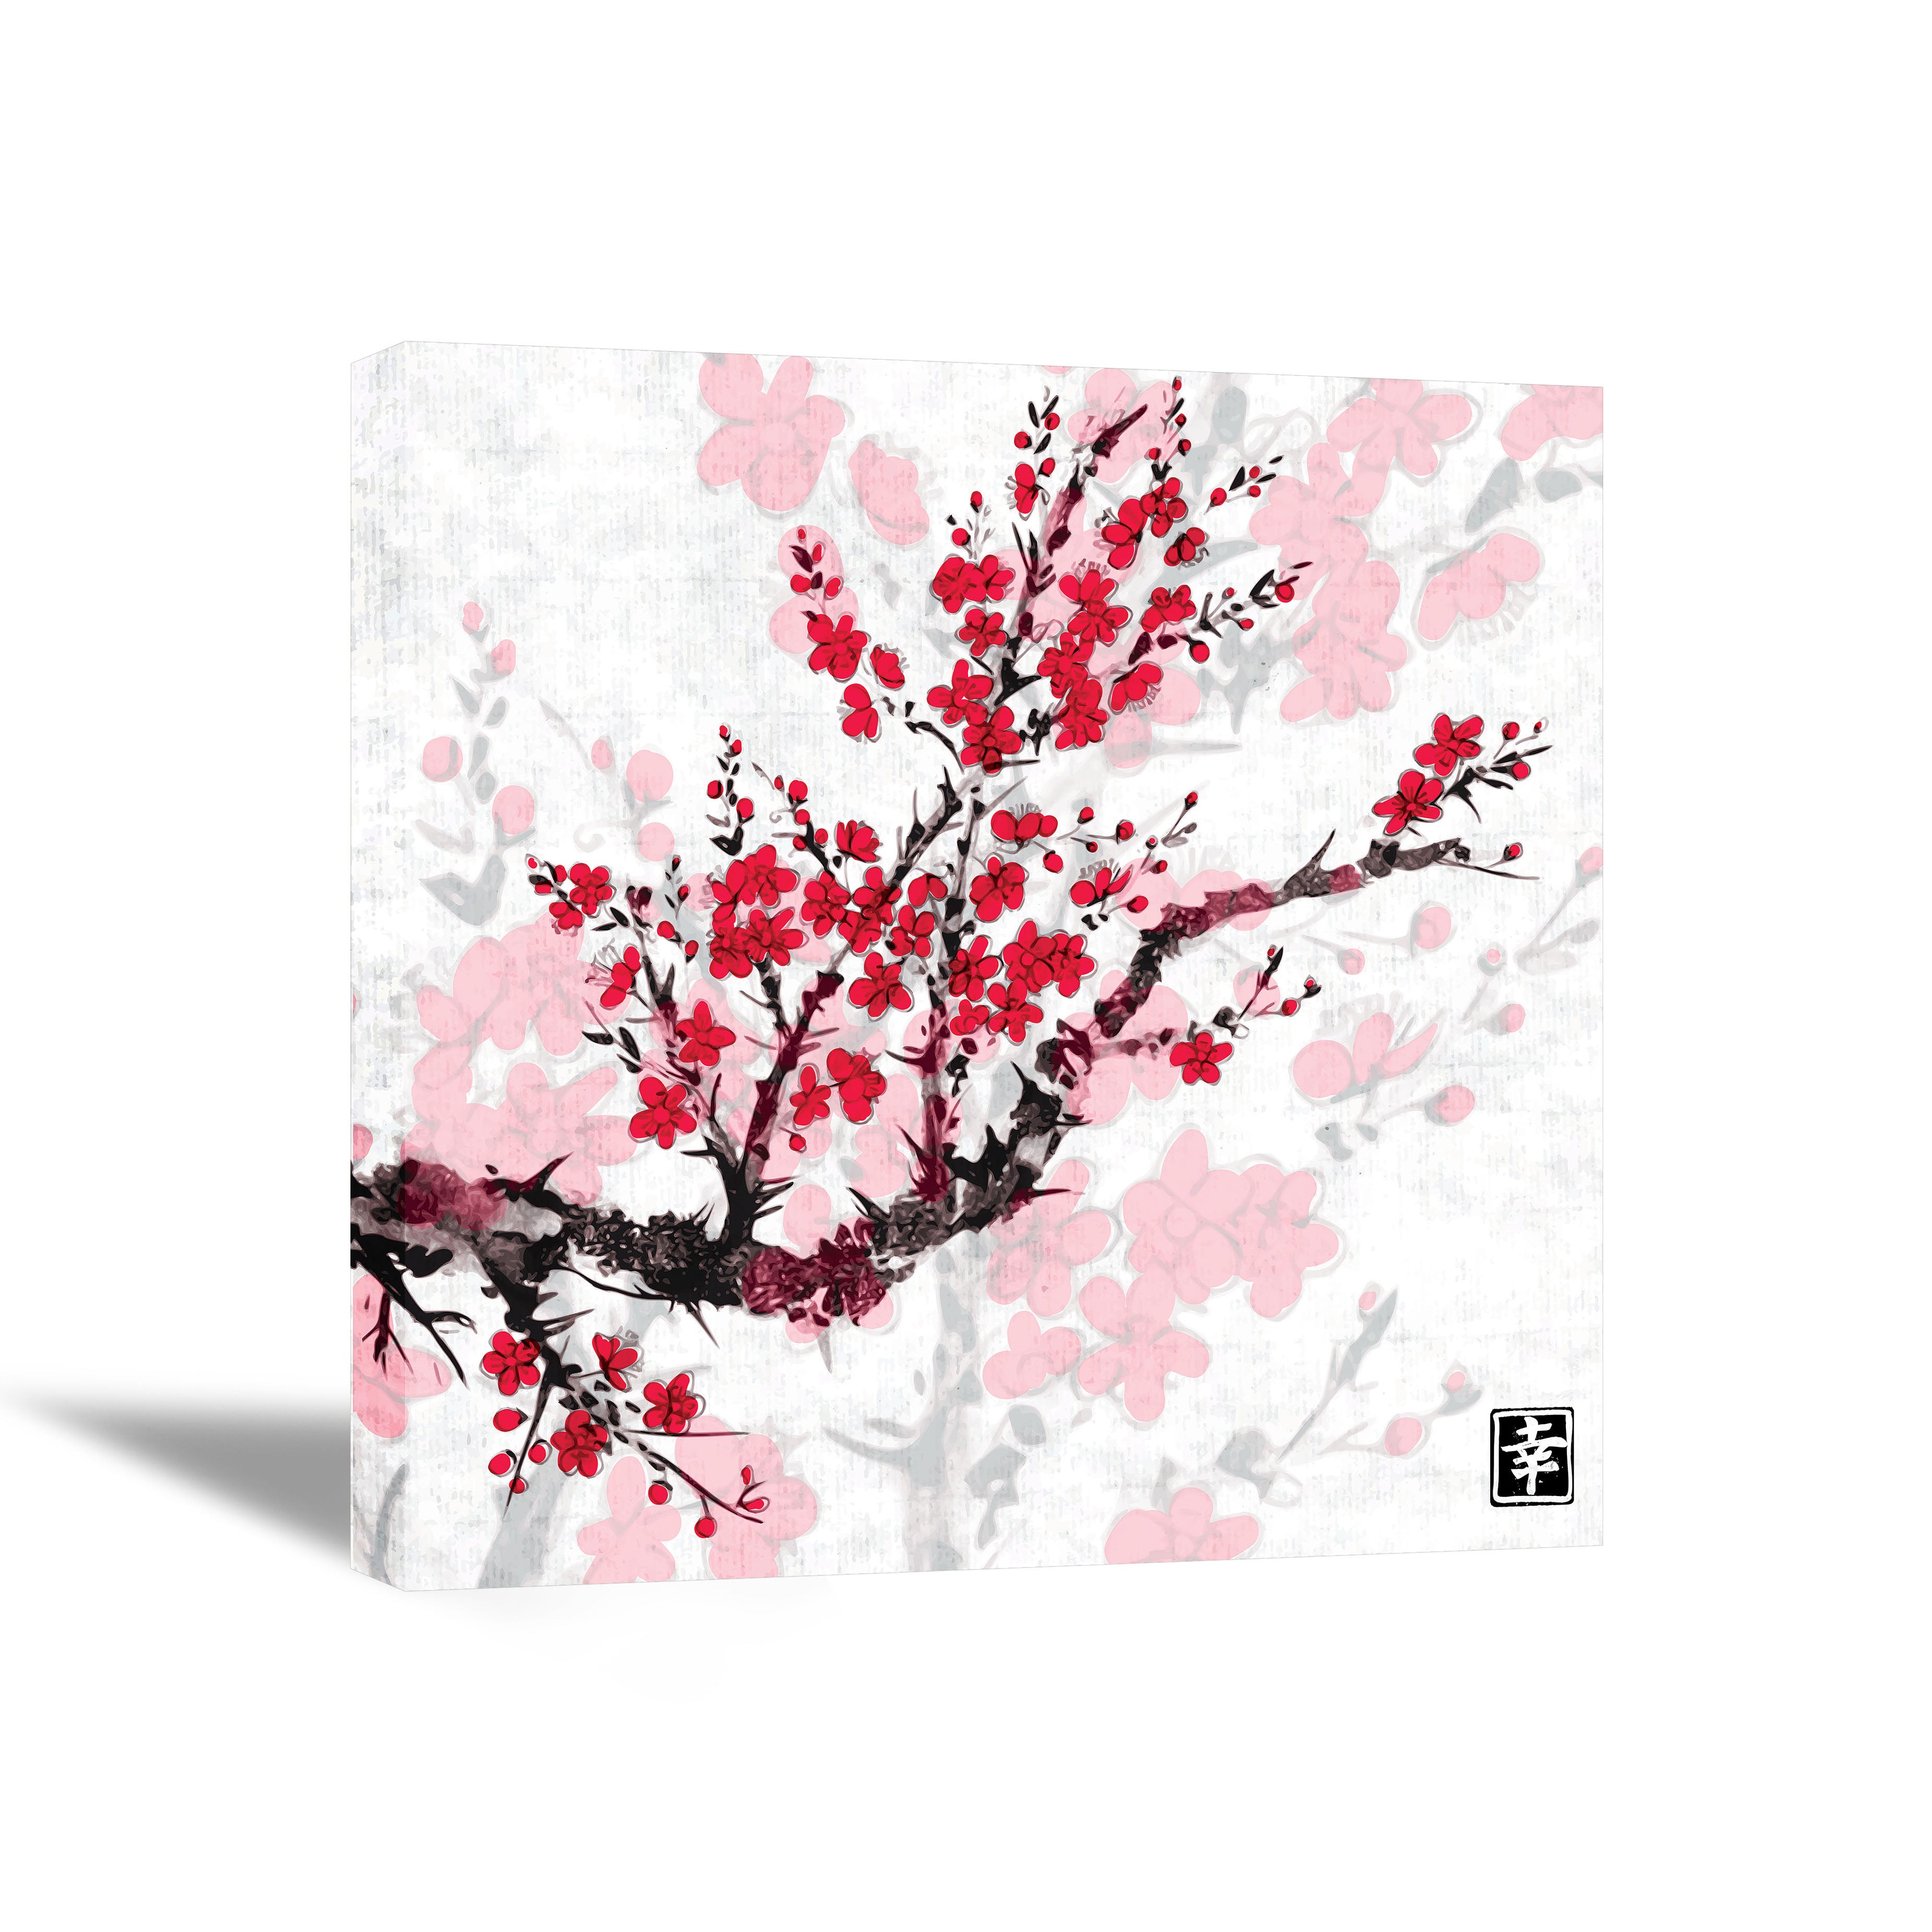 Drawn Cherry Blossom